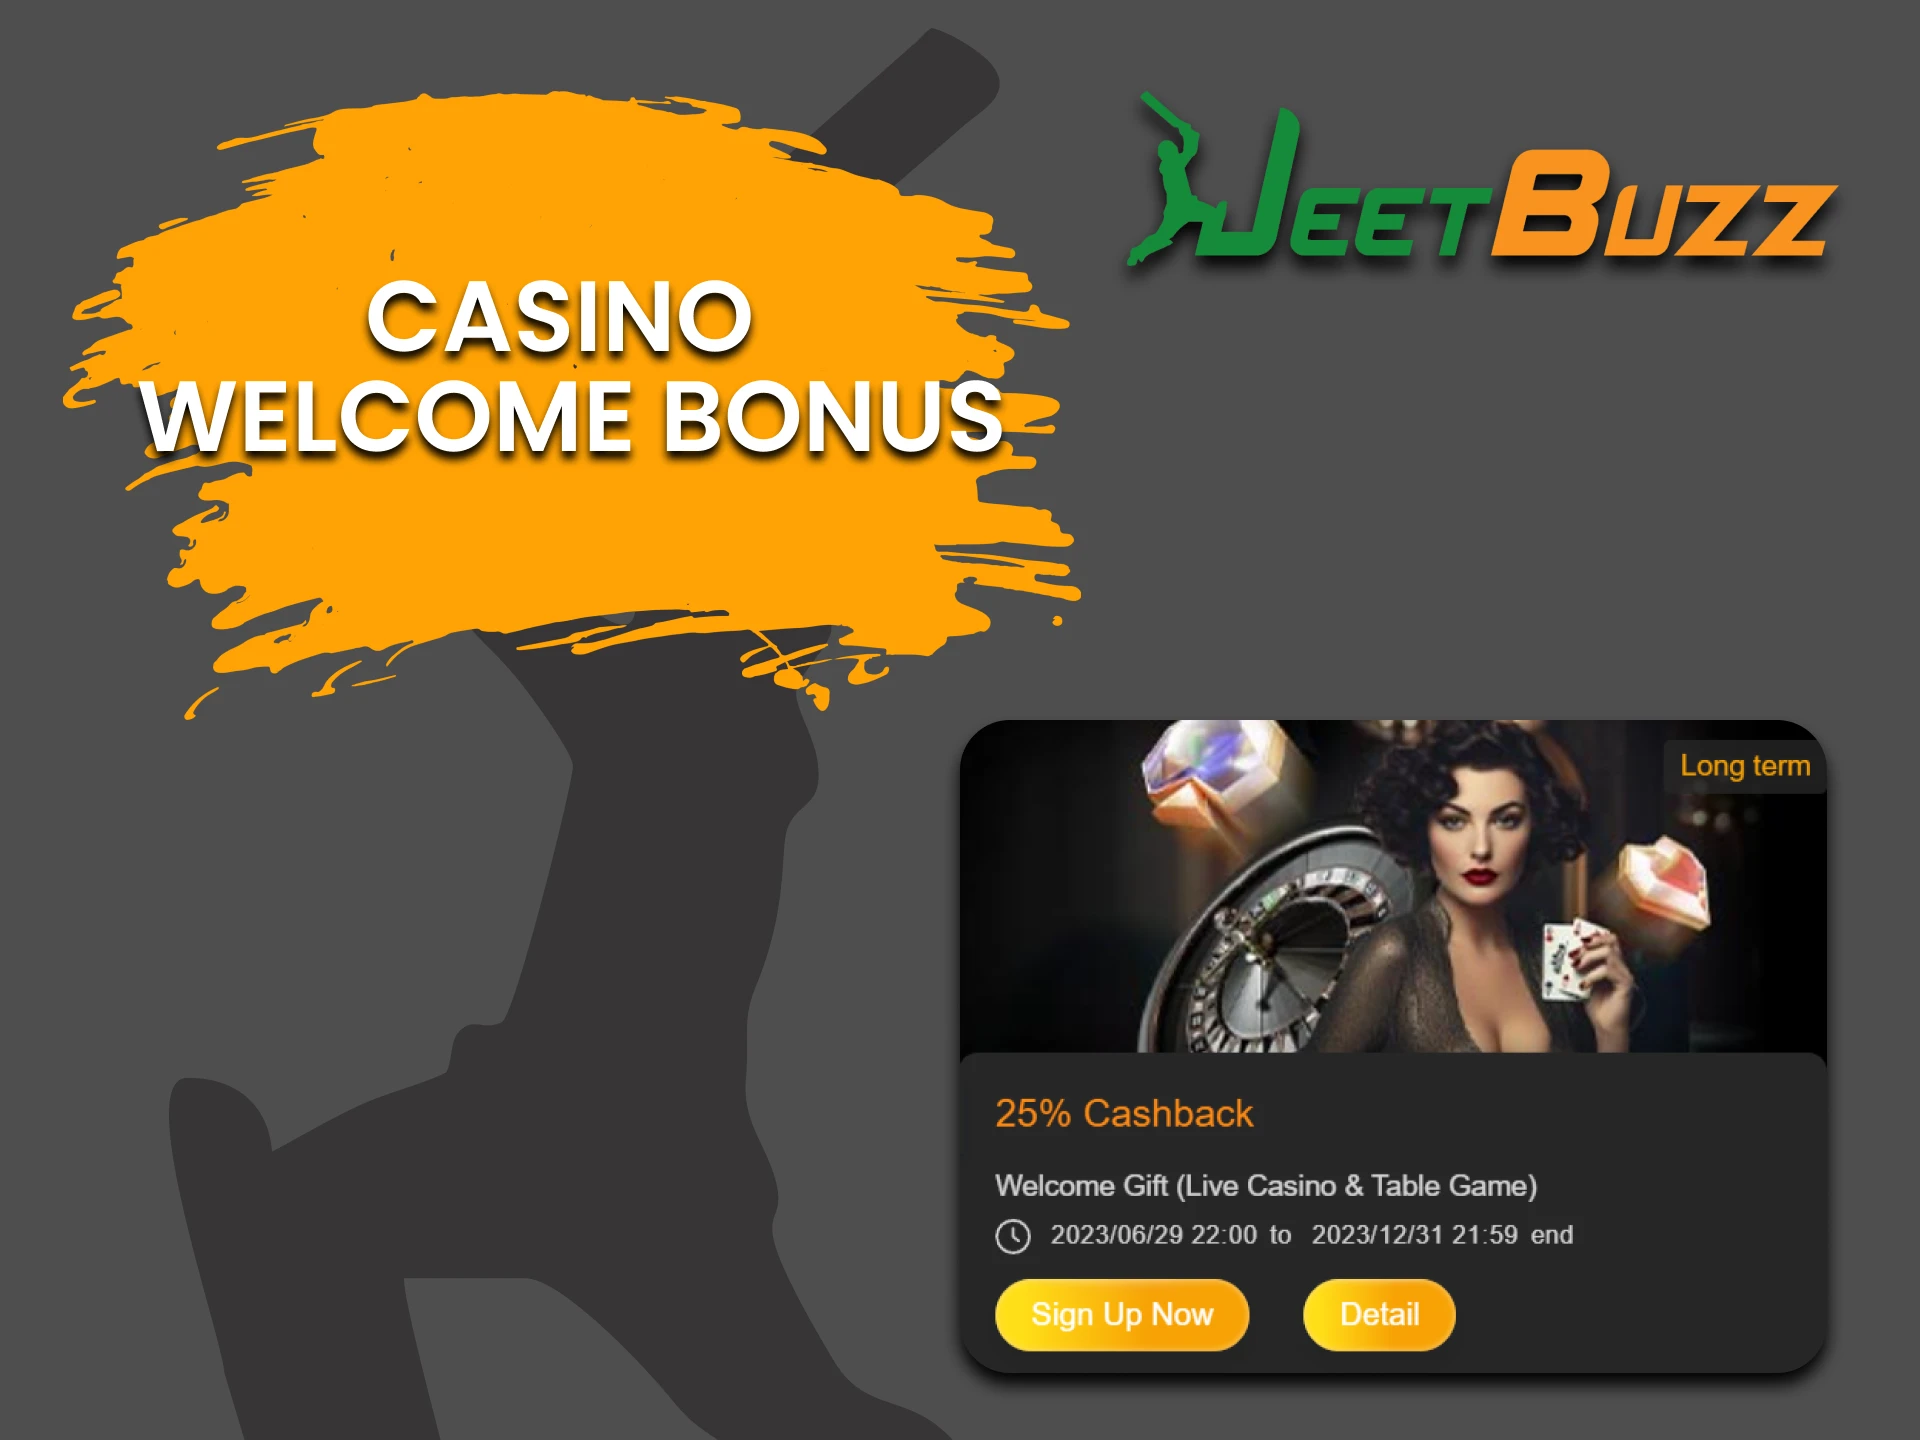 Claim your casino gaming bonus at JeetBuzz.